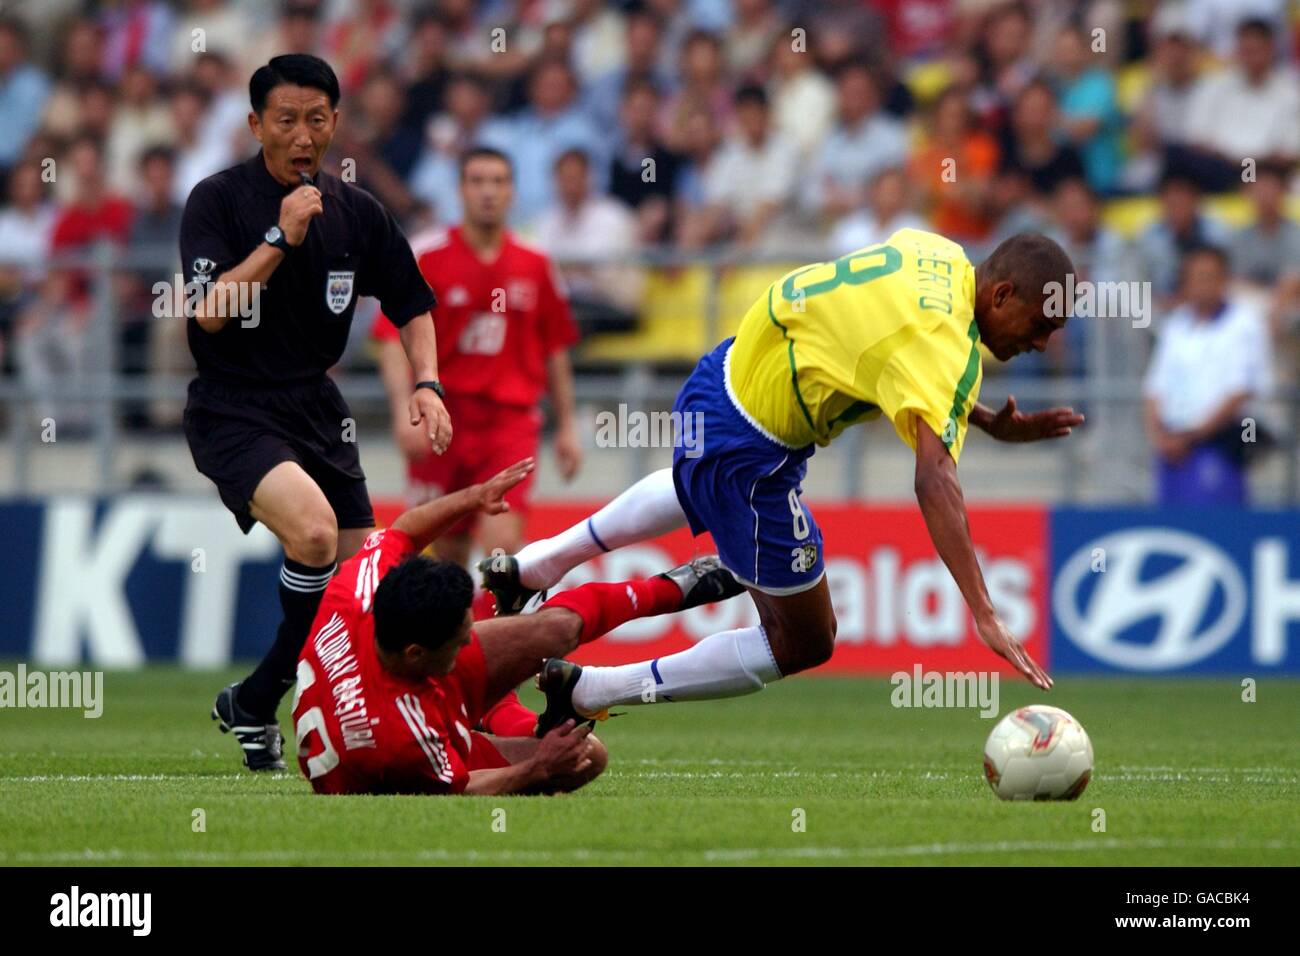 Soccer - FIFA World Cup 2002 - Group C - Brazil v Turkey. Turkey's Yildiray Basturk (c) brings down Brazil's Gilberto Silva (r) under the nose of Referee Young Joo Kim (l) Stock Photo